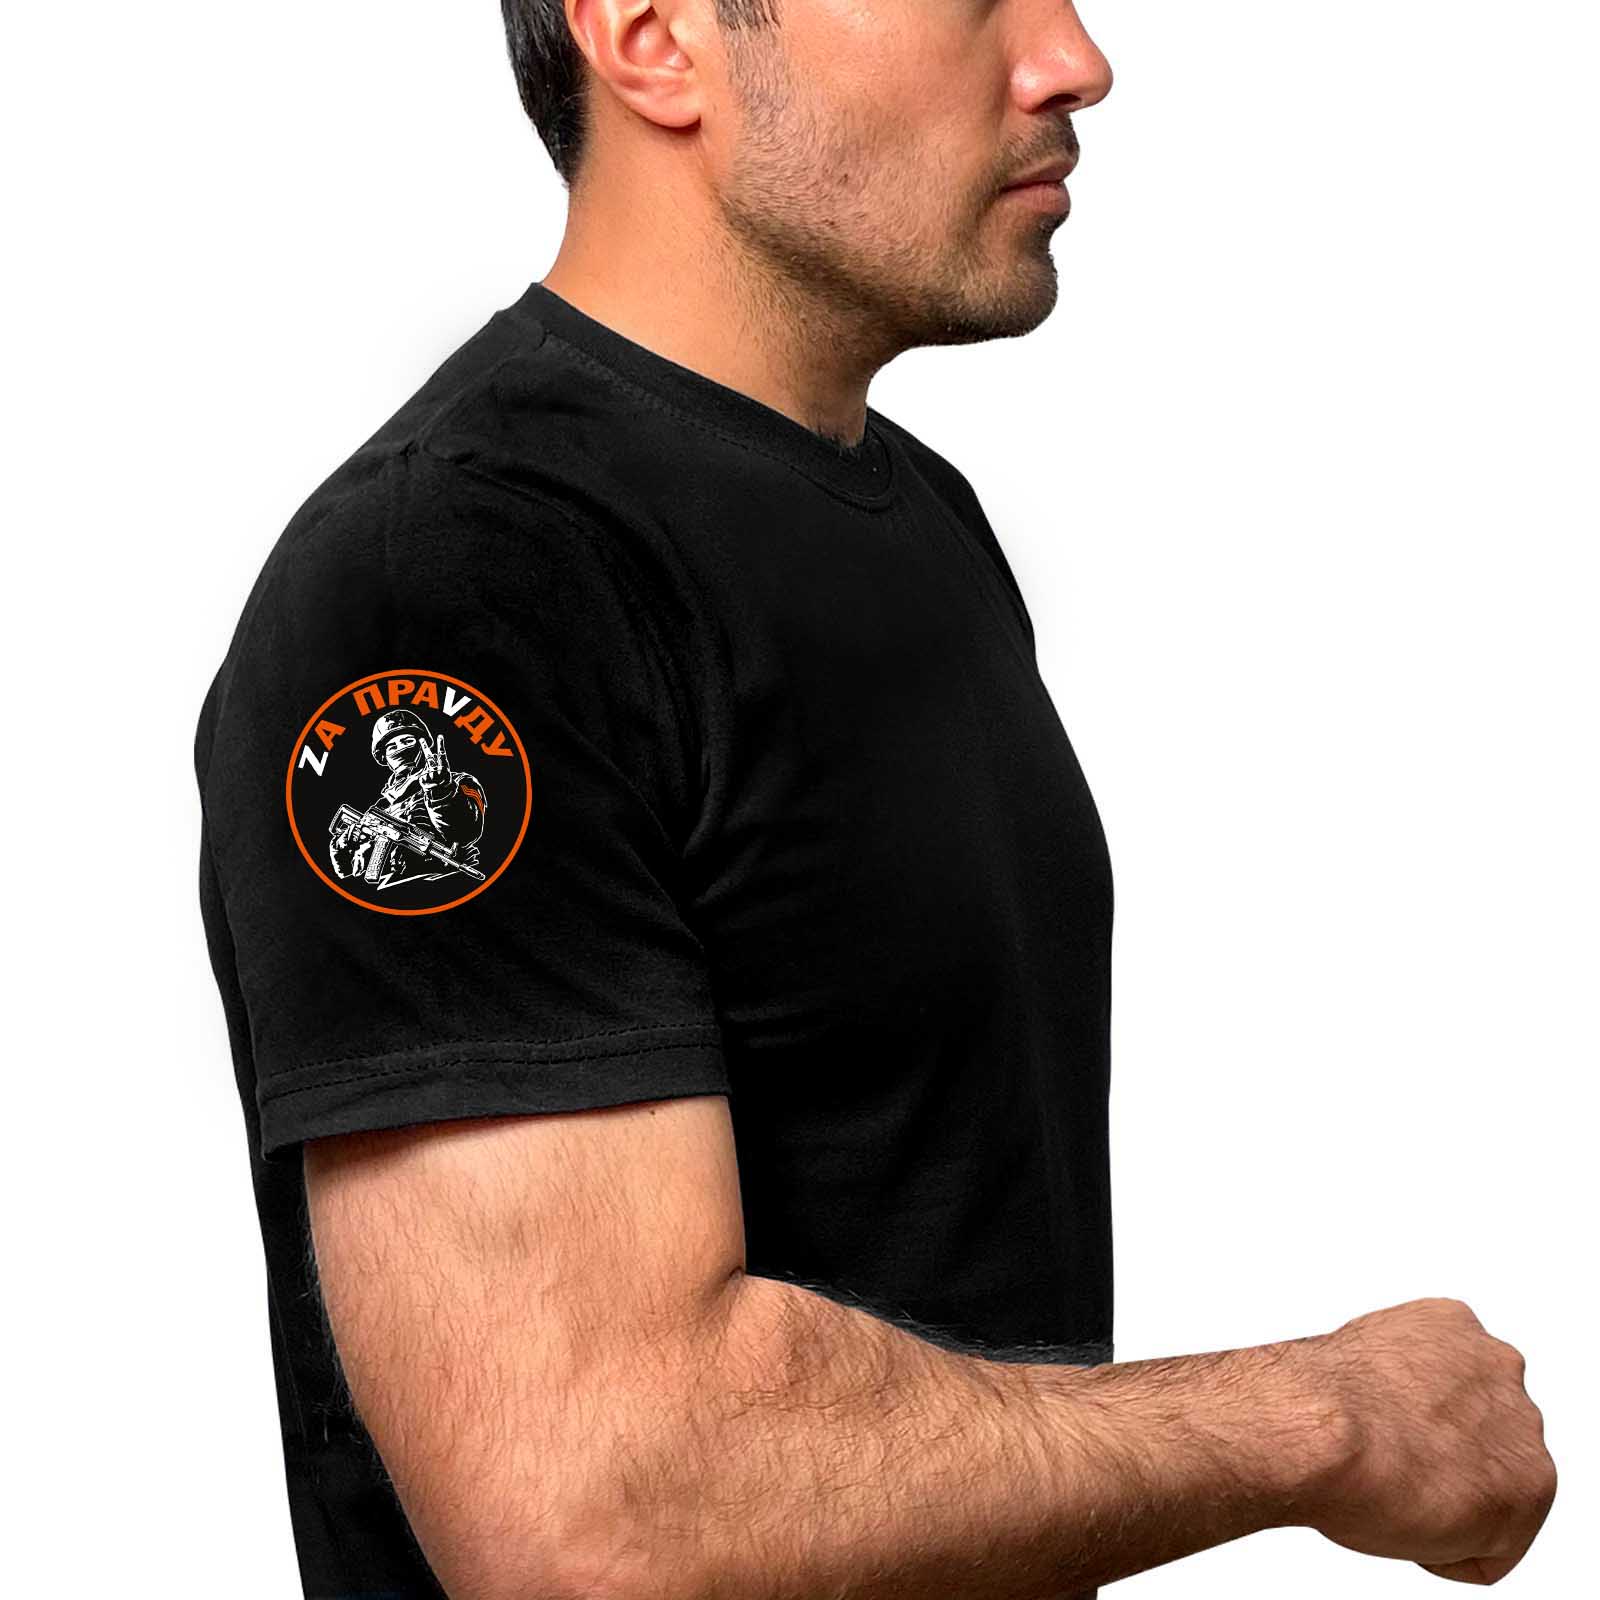 Чёрная футболка с термопереводкой "Zа праVду" на рукаве